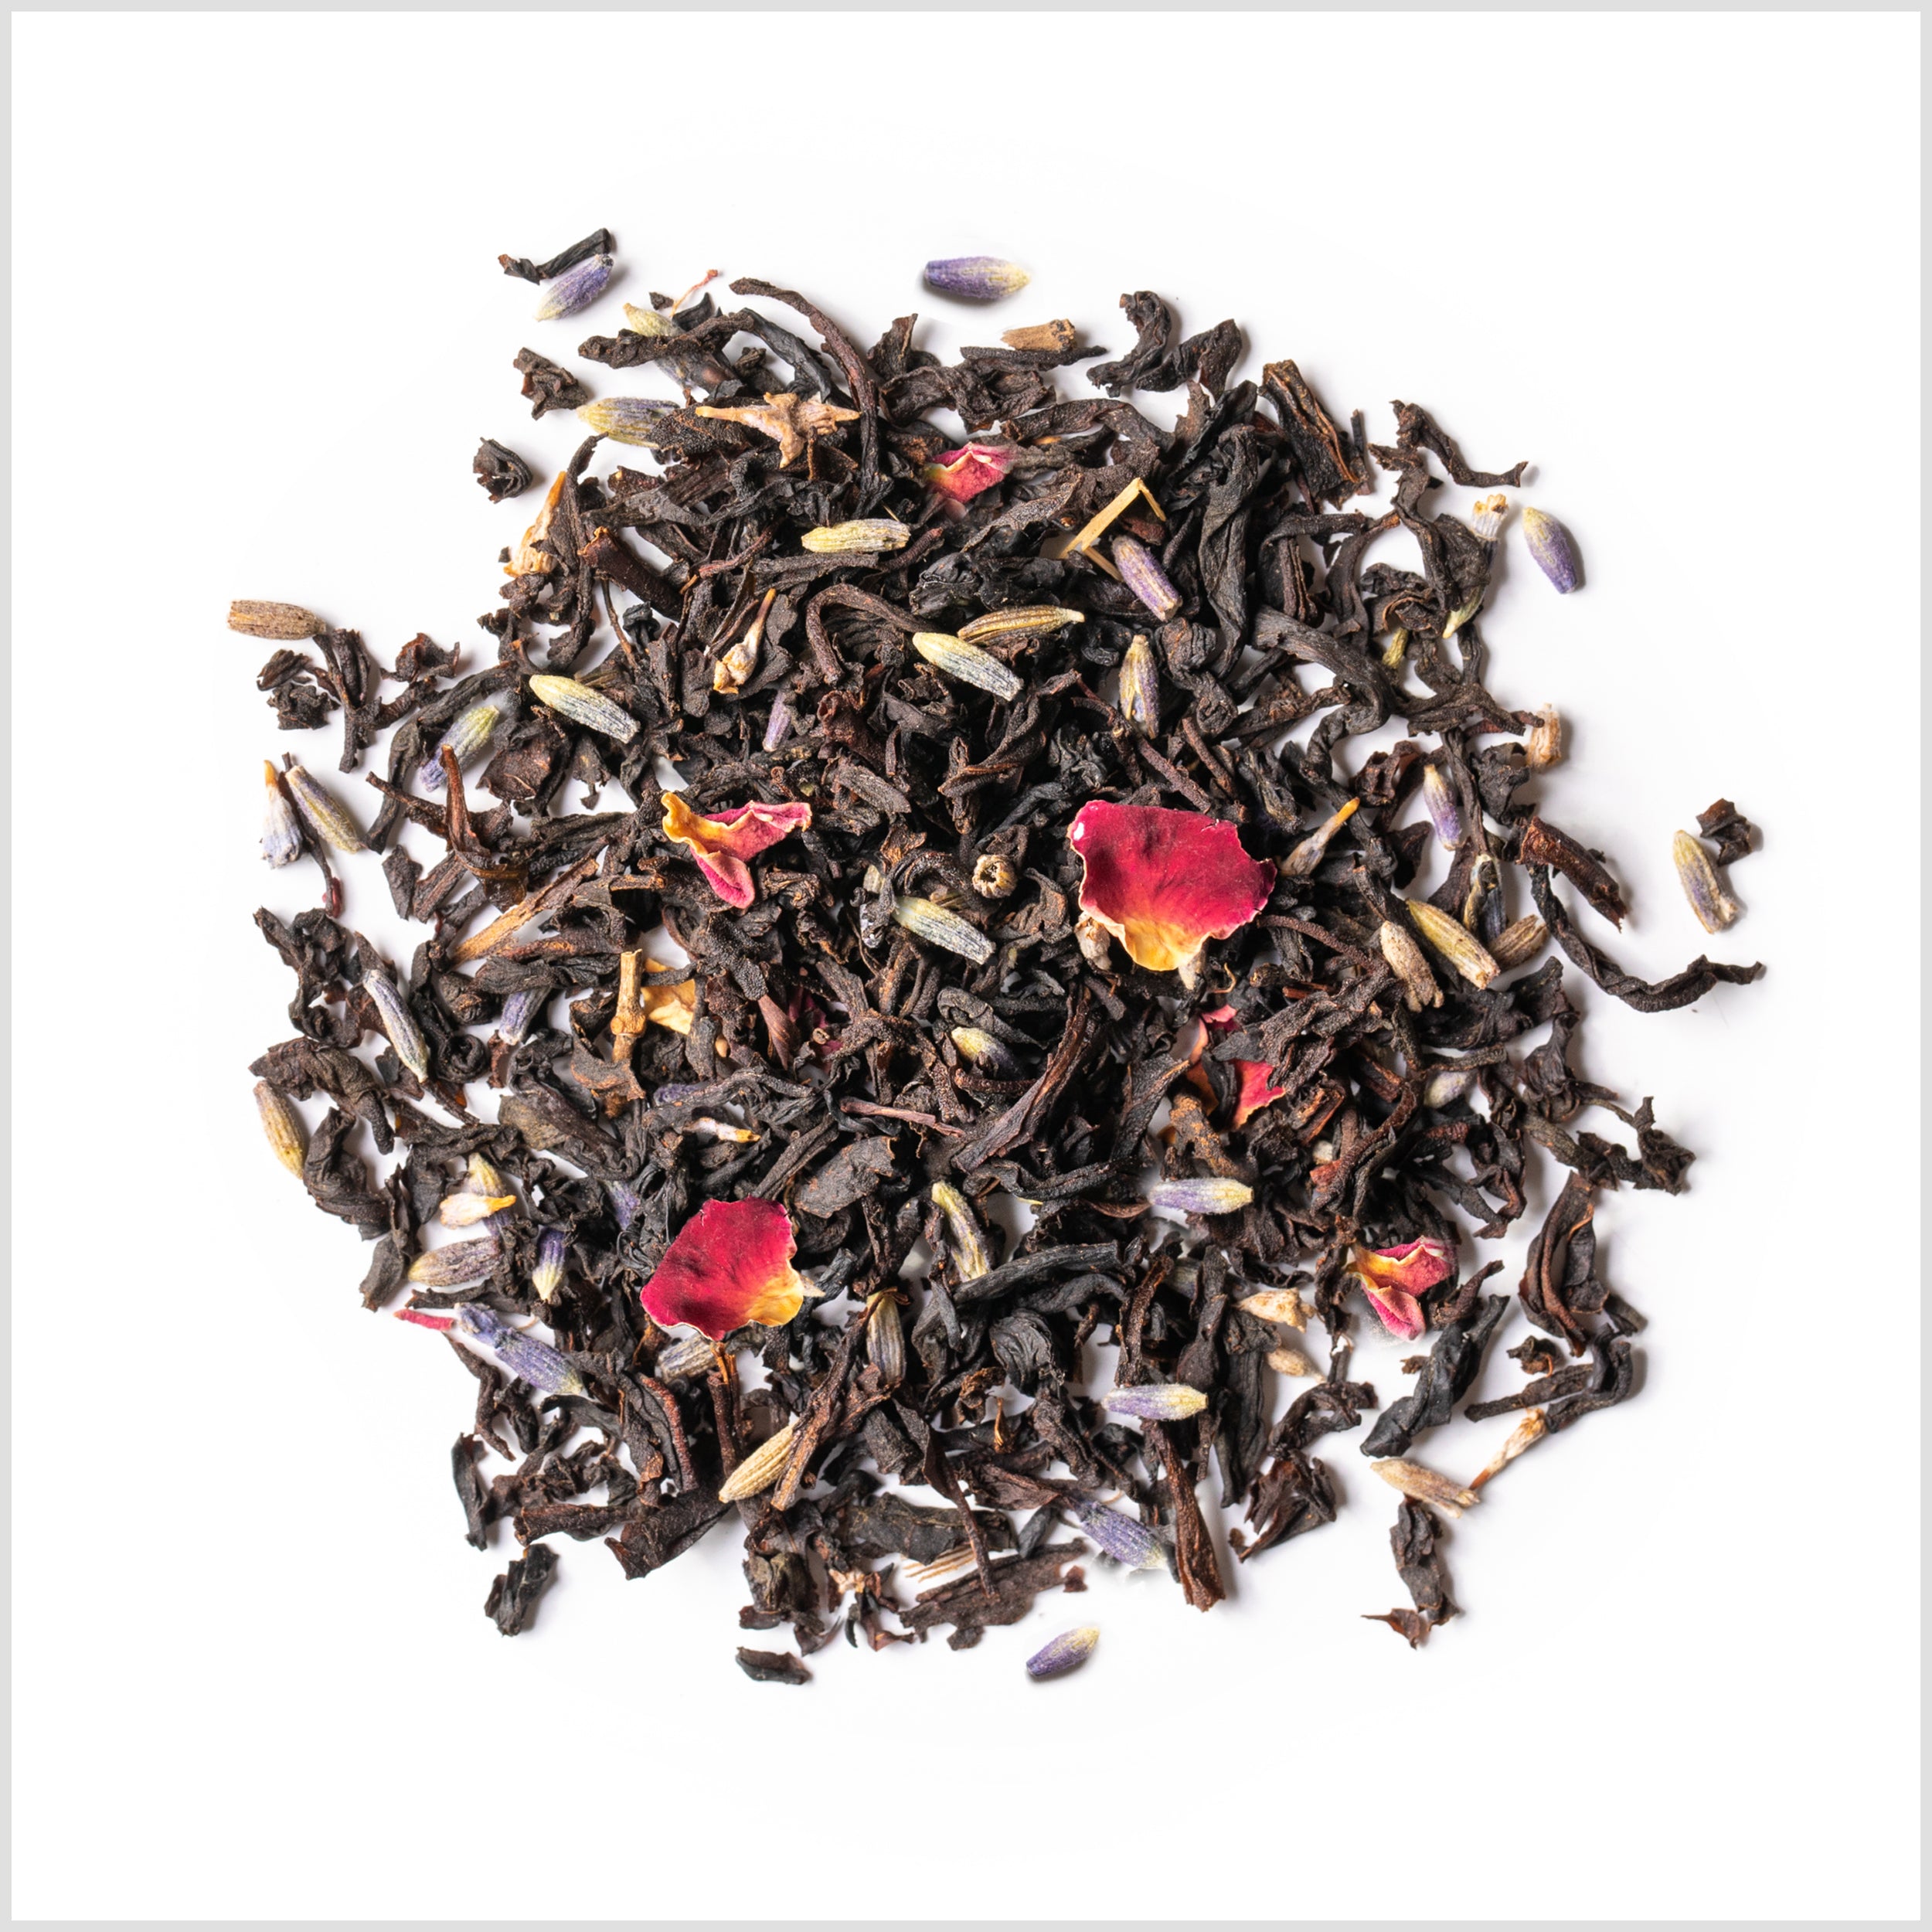 Circular pile of loose-leaf black tea with lavender and red rose petals.